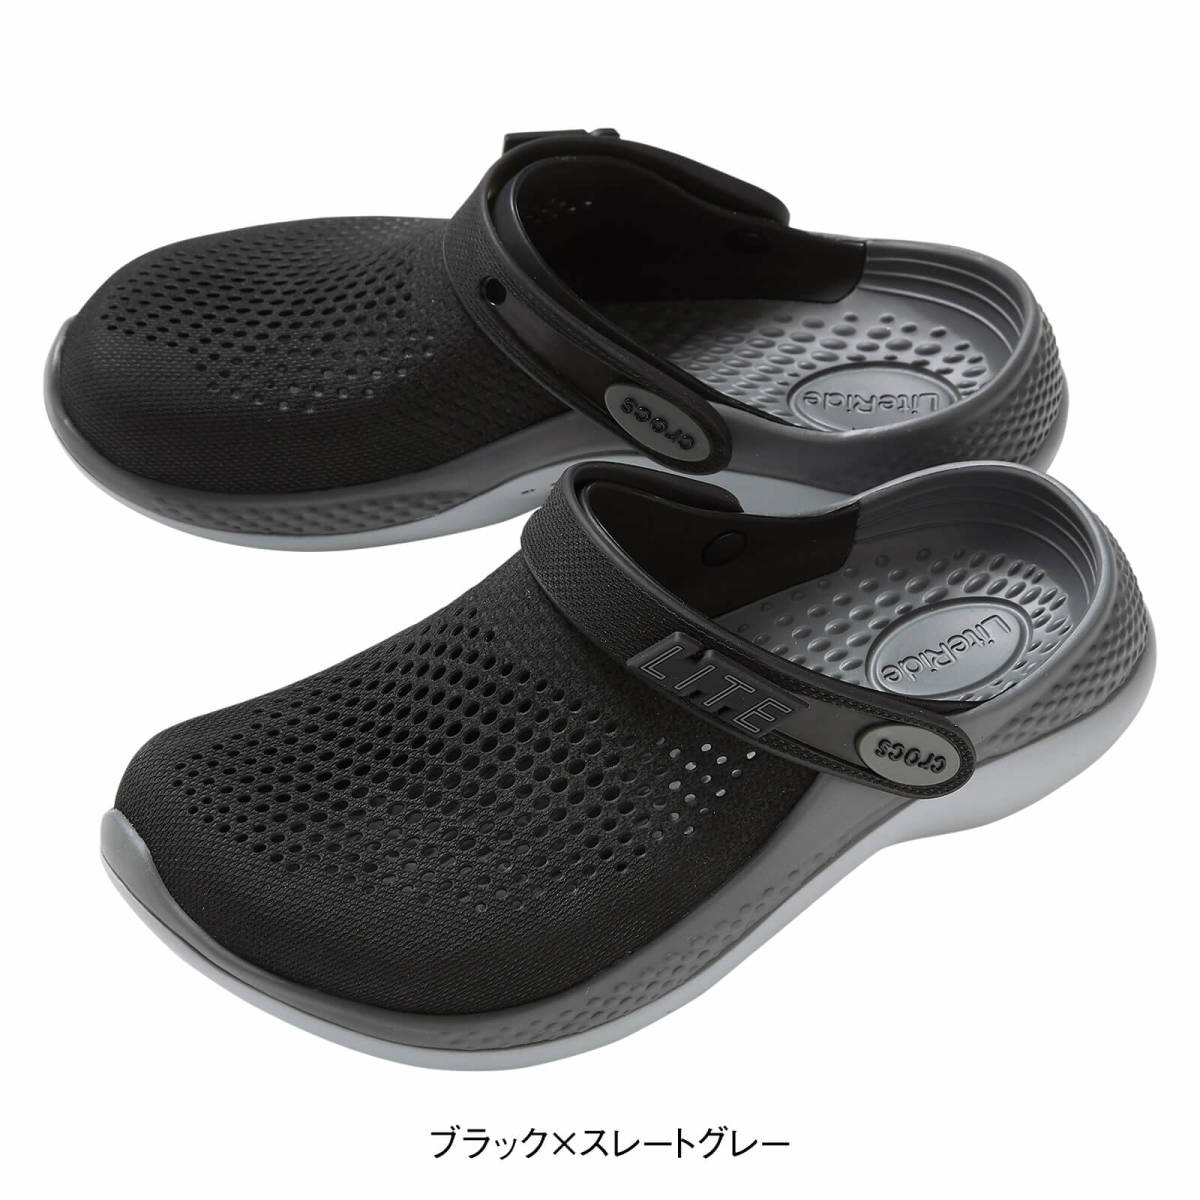  postage included Crocs light ride 360 clog black /s rate gray M10W12 28.0cm ( Hokkaido . Okinawa only postage . thousand jpy it takes )